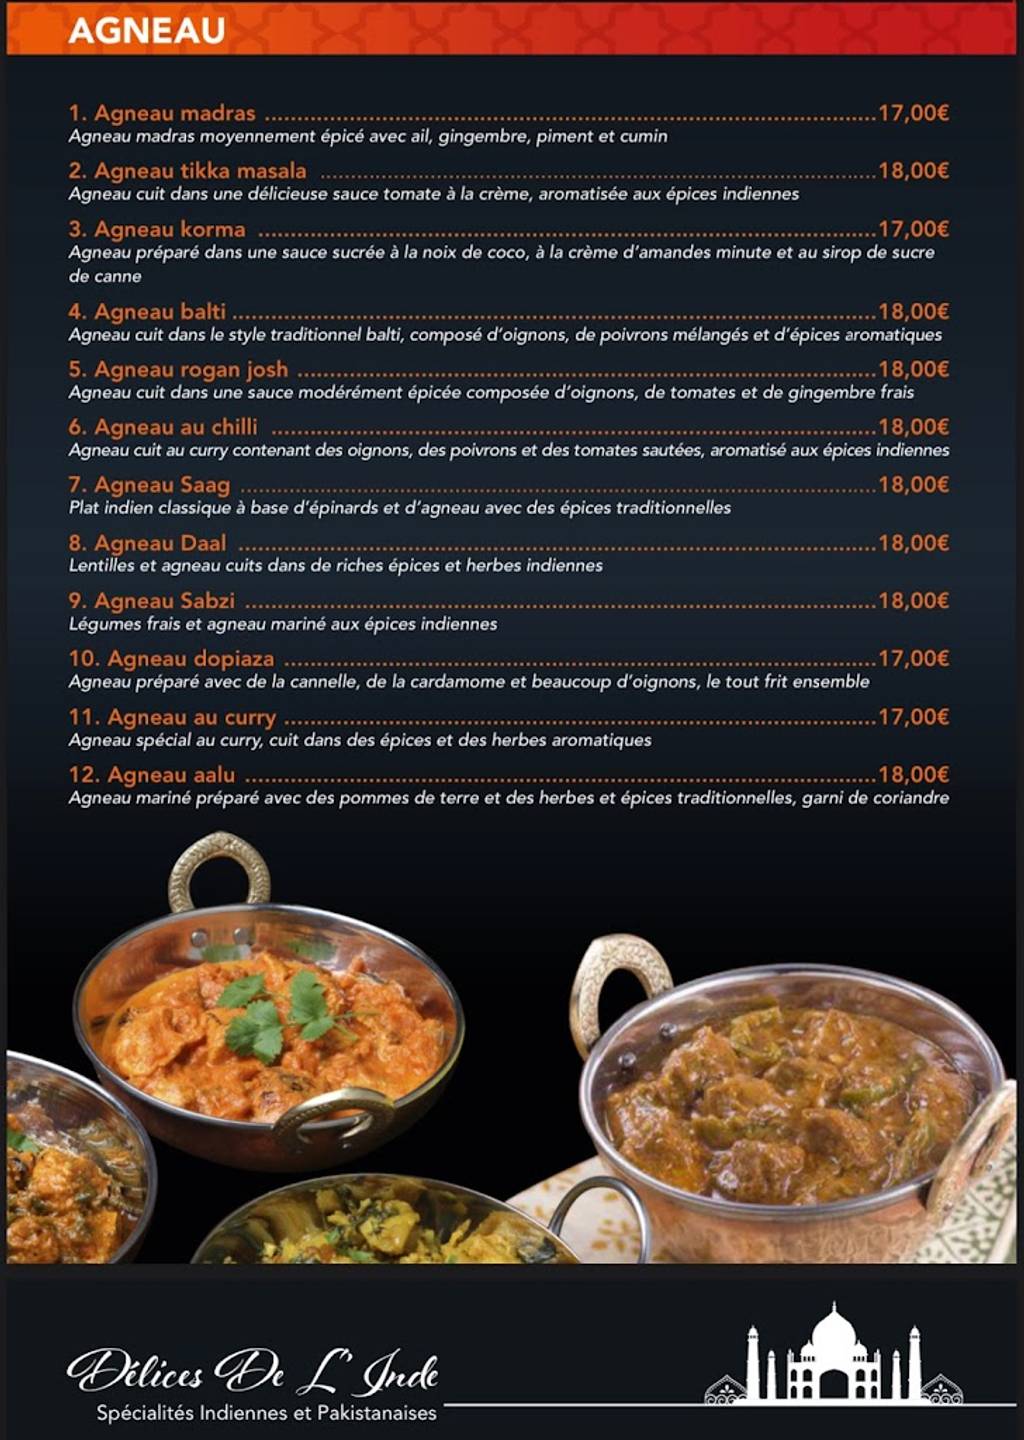 Délices de L'Inde Mulhouse - Food Tableware Ingredient Recipe Cuisine